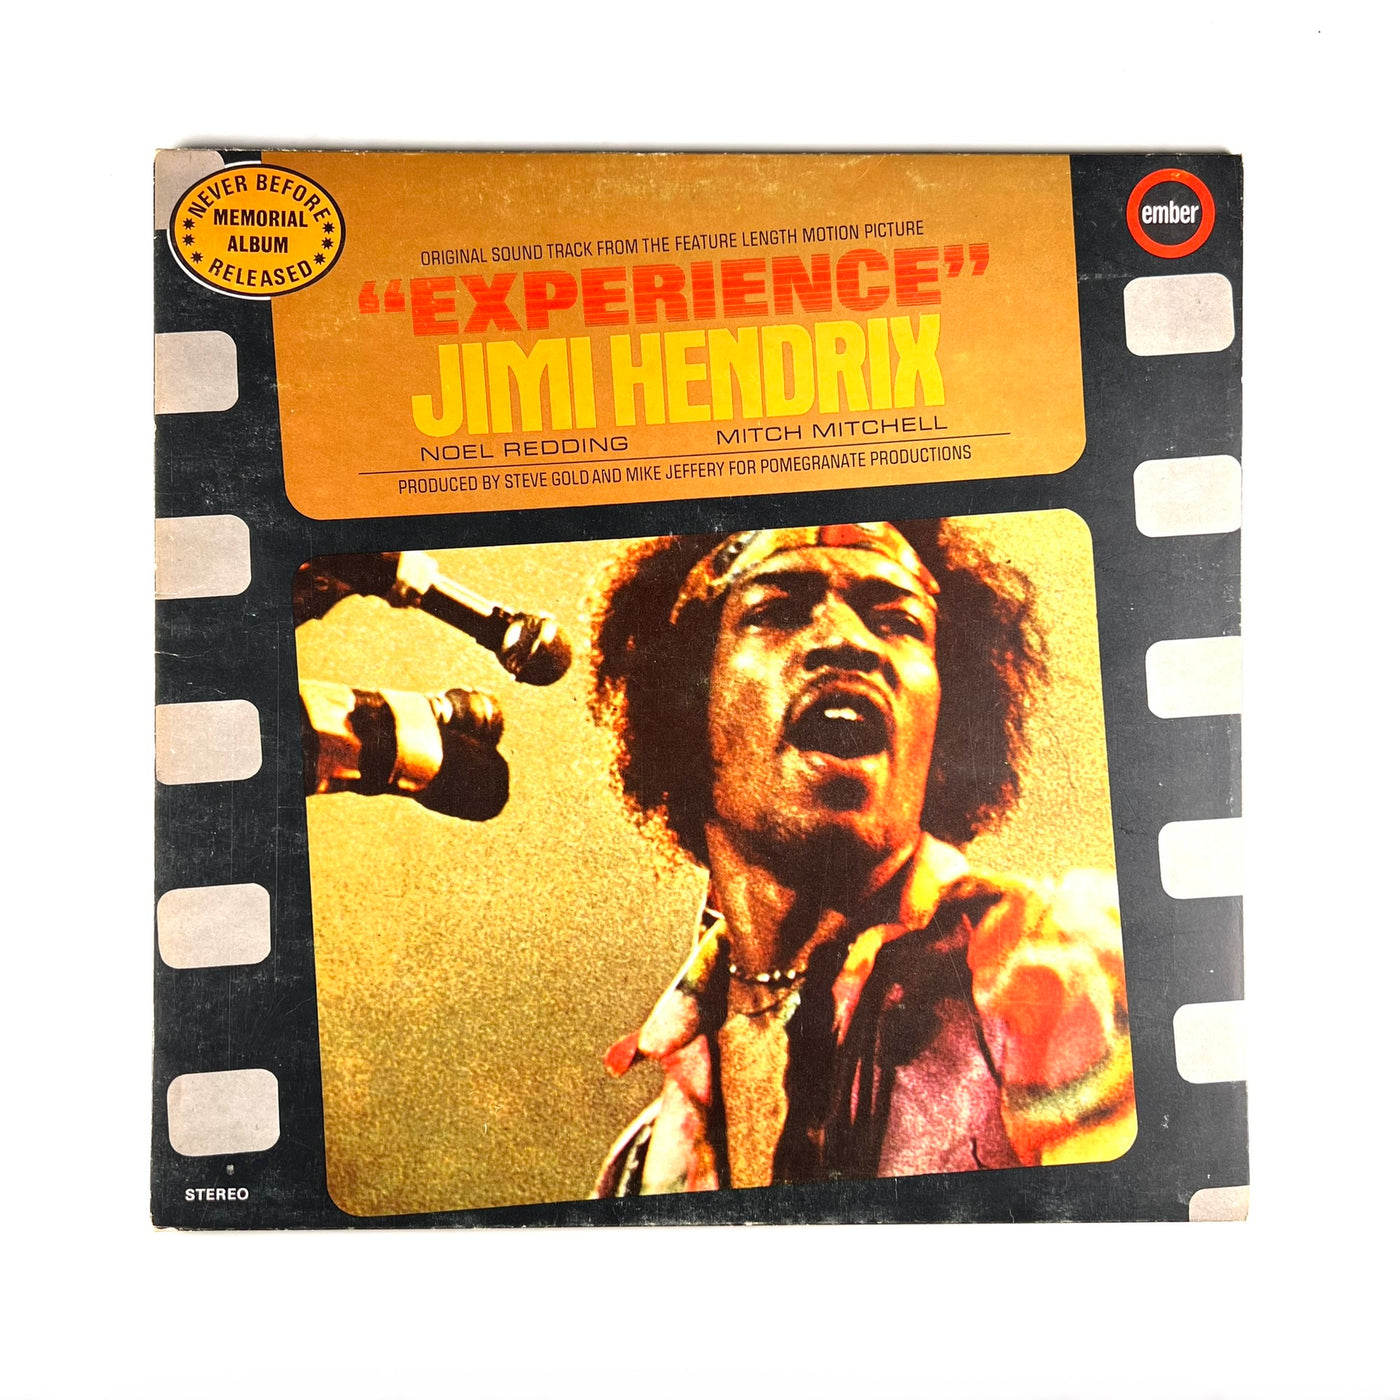 Jimi Hendrix - Original Sound Track 'Experience'